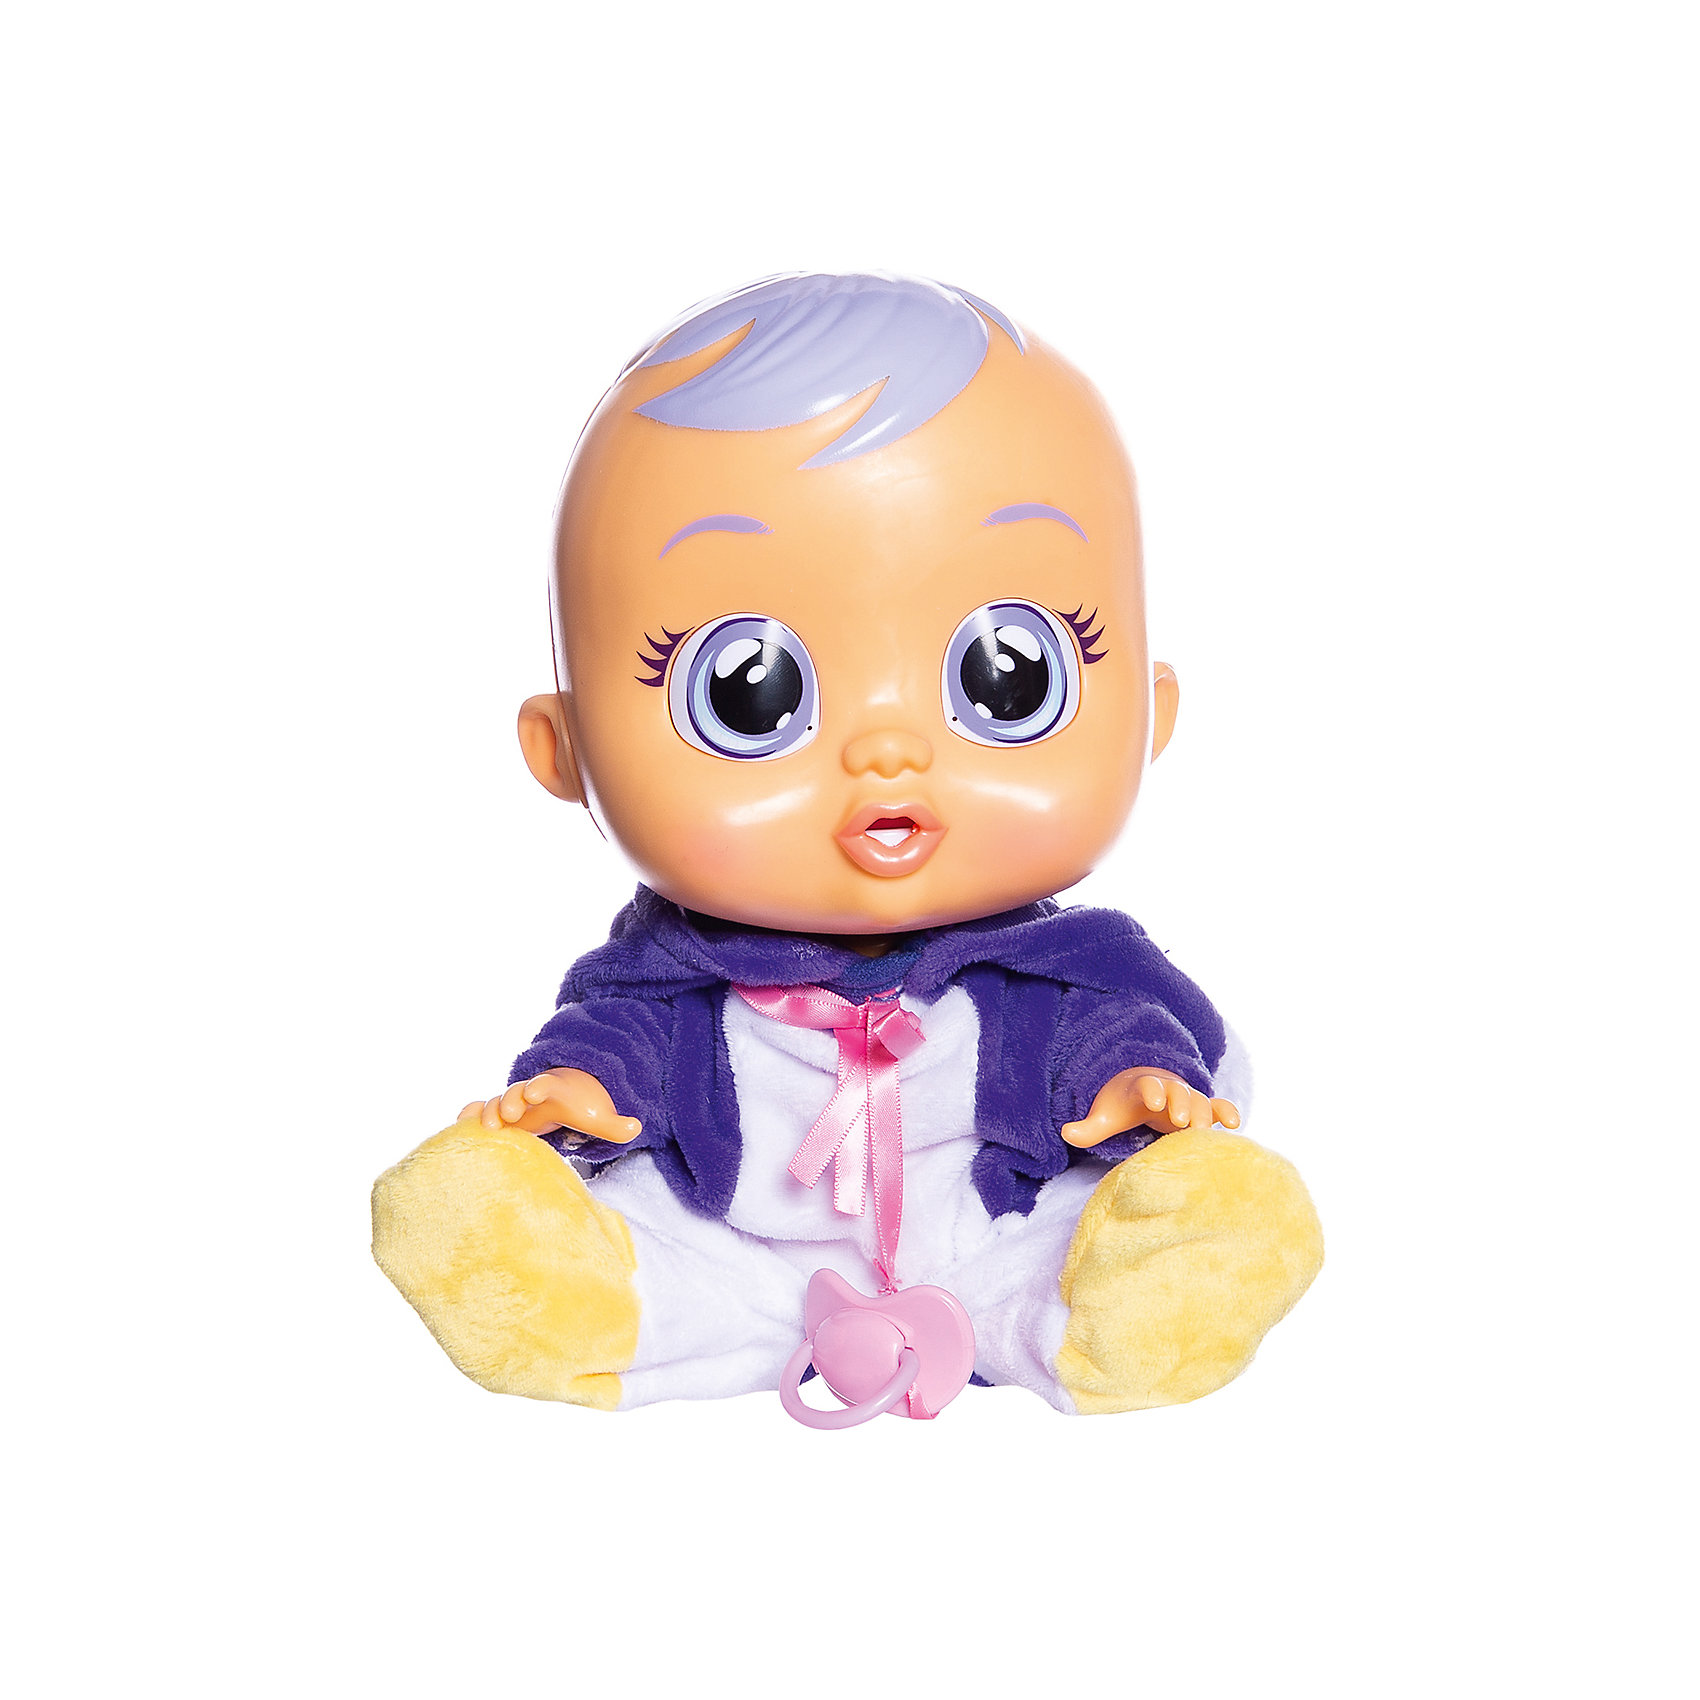 Imc toys. Пупс IMC Toys Cry Babies Плачущий младенец Нала, 31 см, 96387. Кукла Плачущий младенец. Пупс с соской. A Baby's Cry.